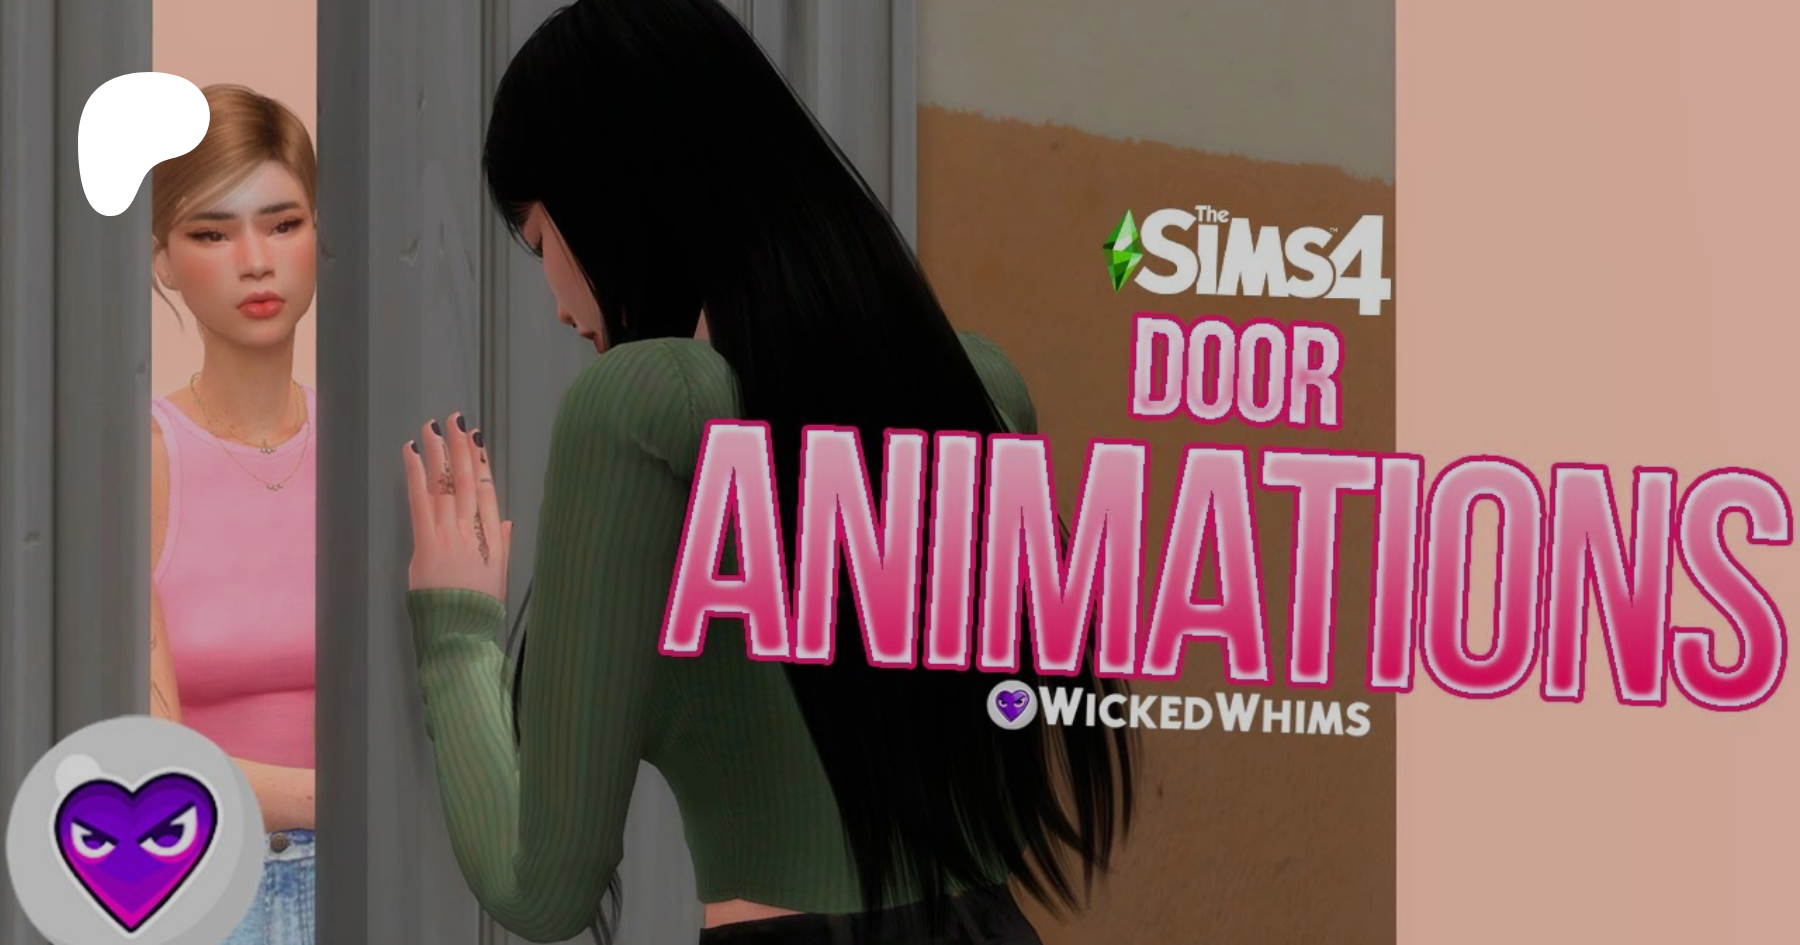 Wicked whims sims 4 как установить. Wicked whims SIMS 4 animations. Wicked Wims animations. Wicked whims all animations. He SIMS 4 "wickedwhims, анимации.